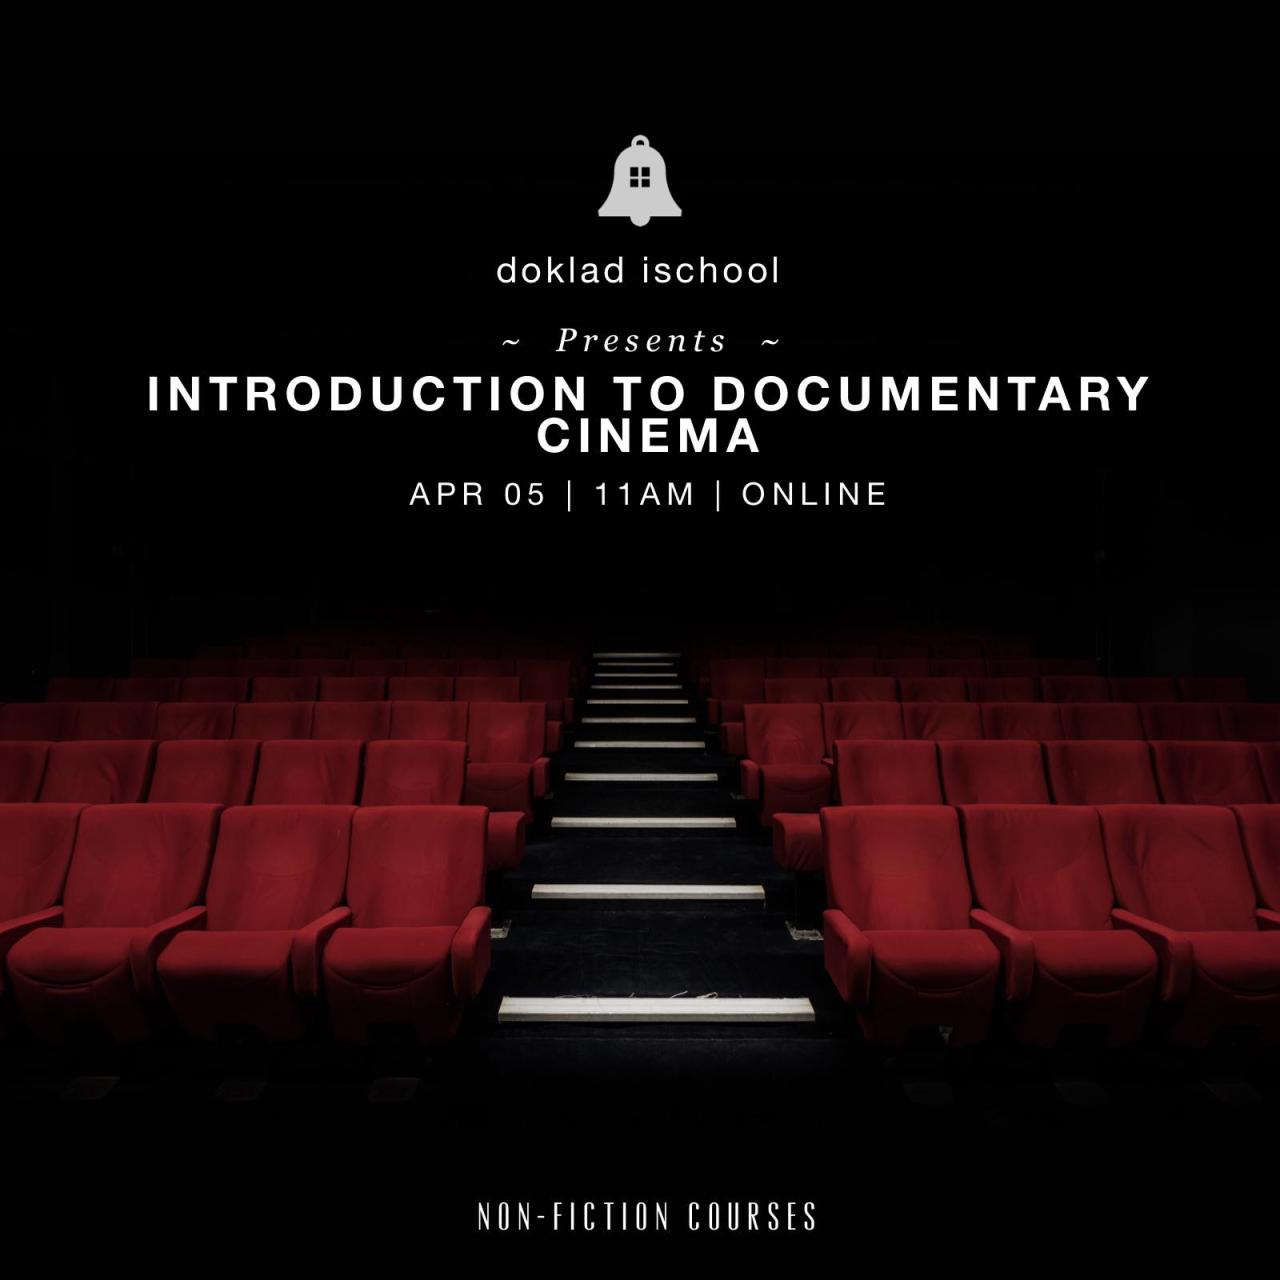 DokladiSchool announces documentary filmmaking course